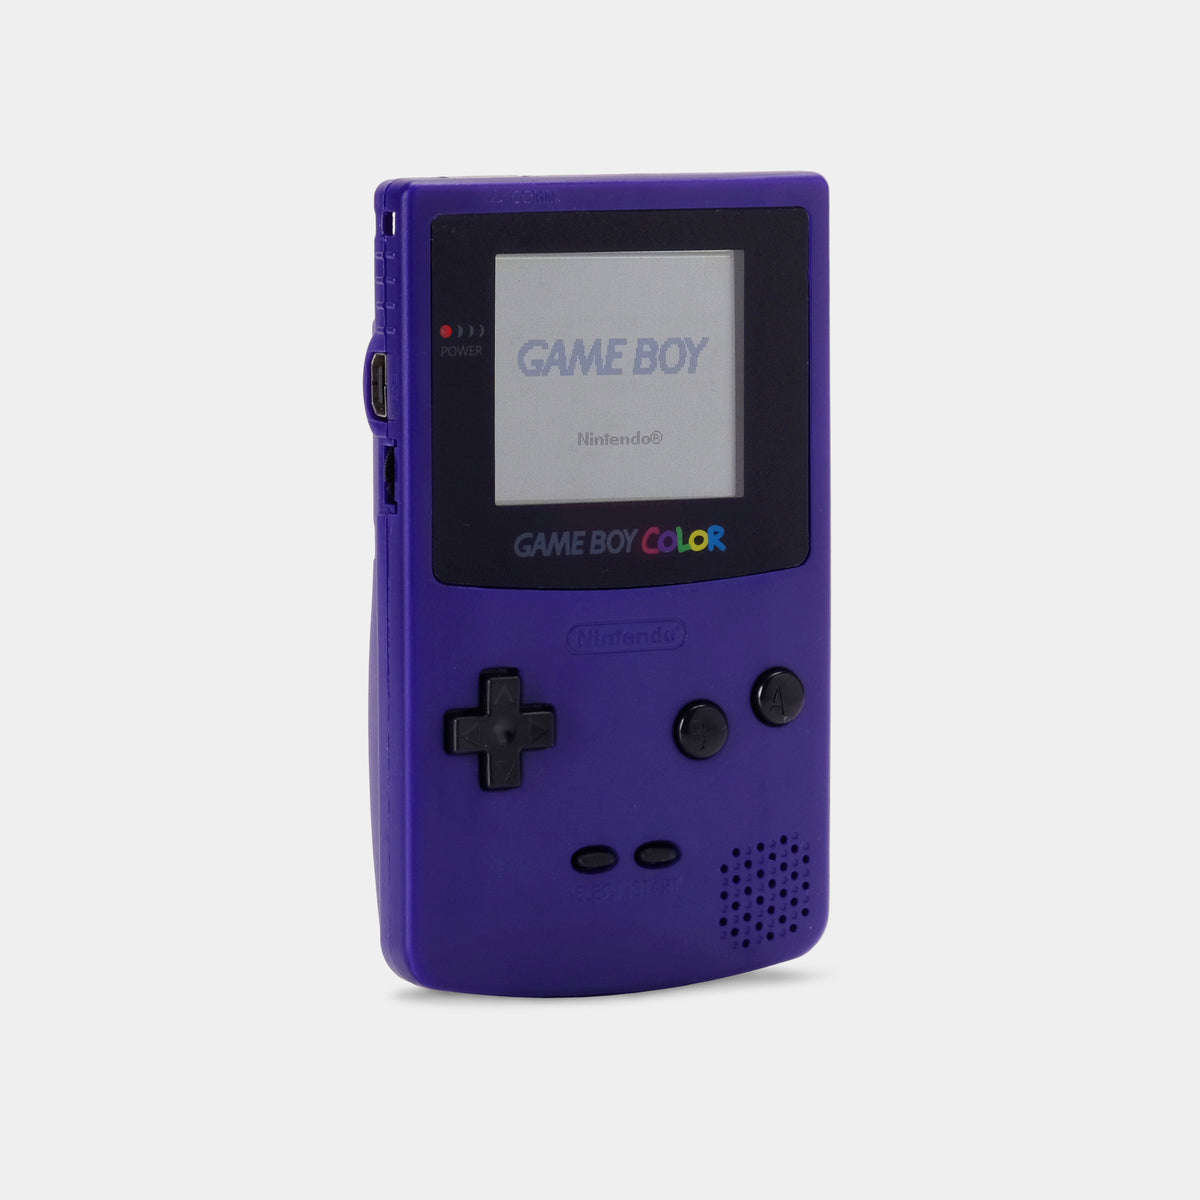 Nintendo Game Boy Color Games and Consoles for Sale – Secret